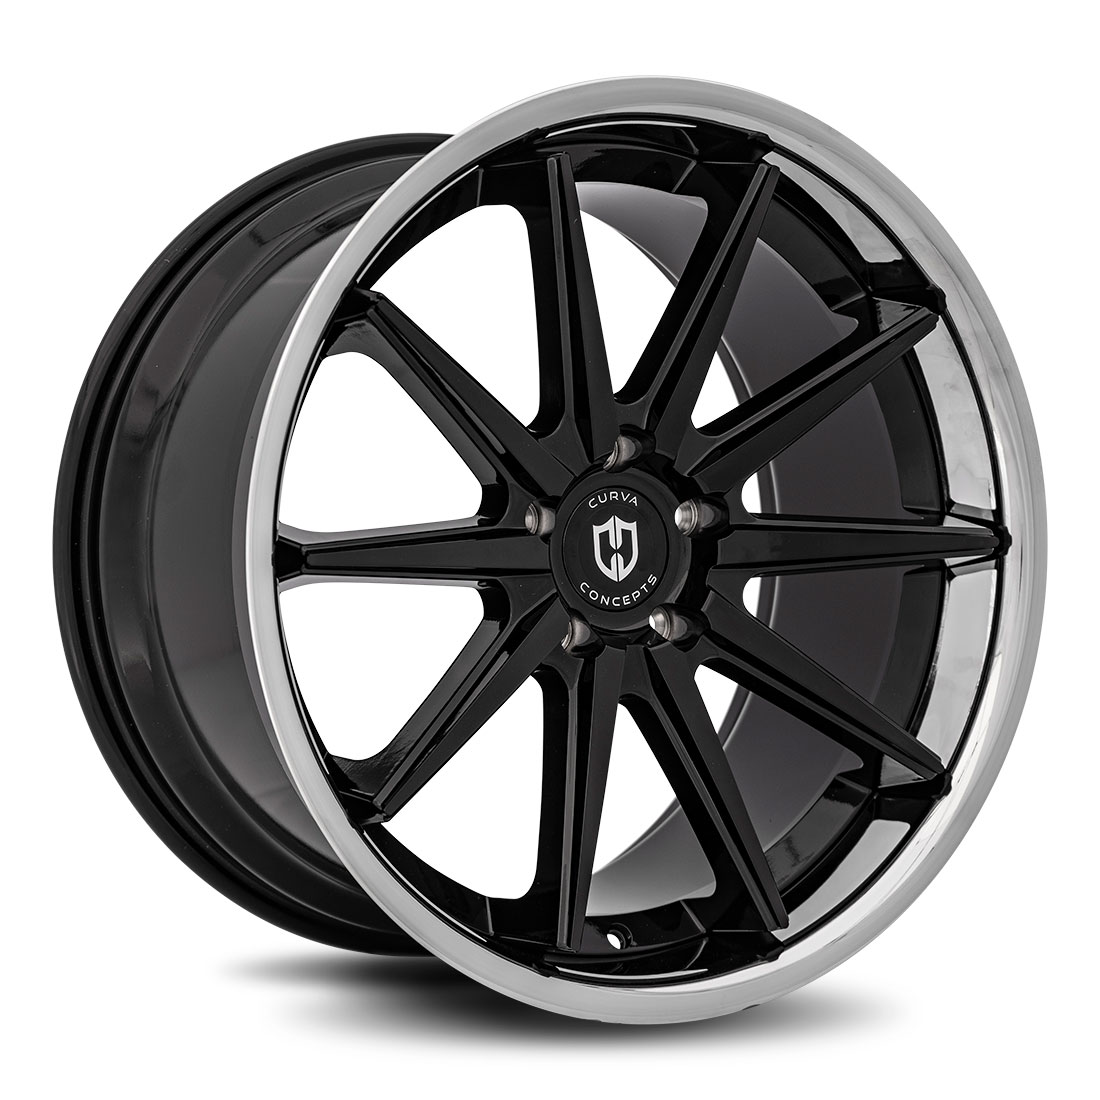 Curva Concepts C24 Gloss Black Chrome Lip Aftermarket Wheels